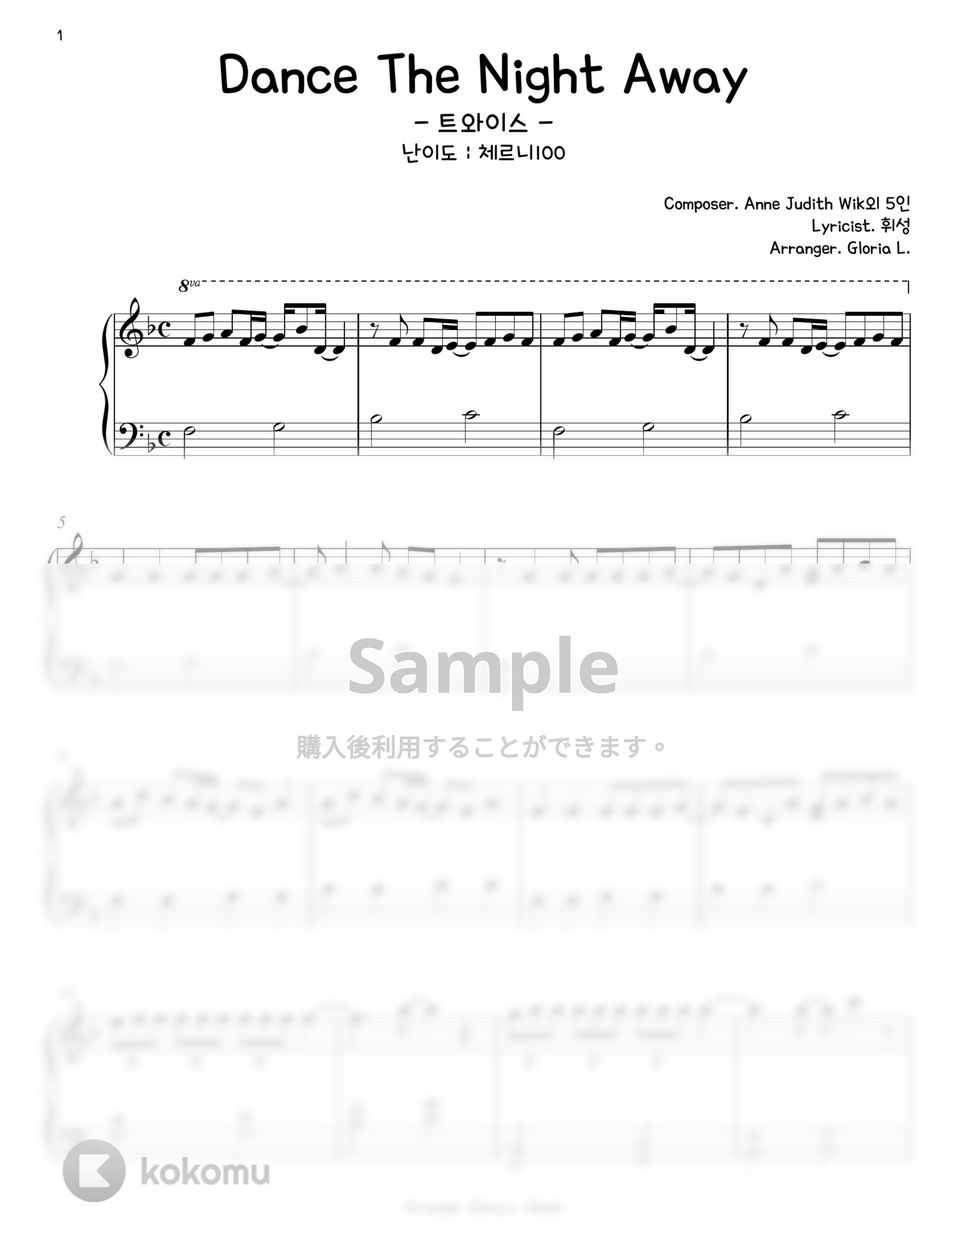 TWICE - Dance the Night Away (難易度チェルニー100) by Gloria L.